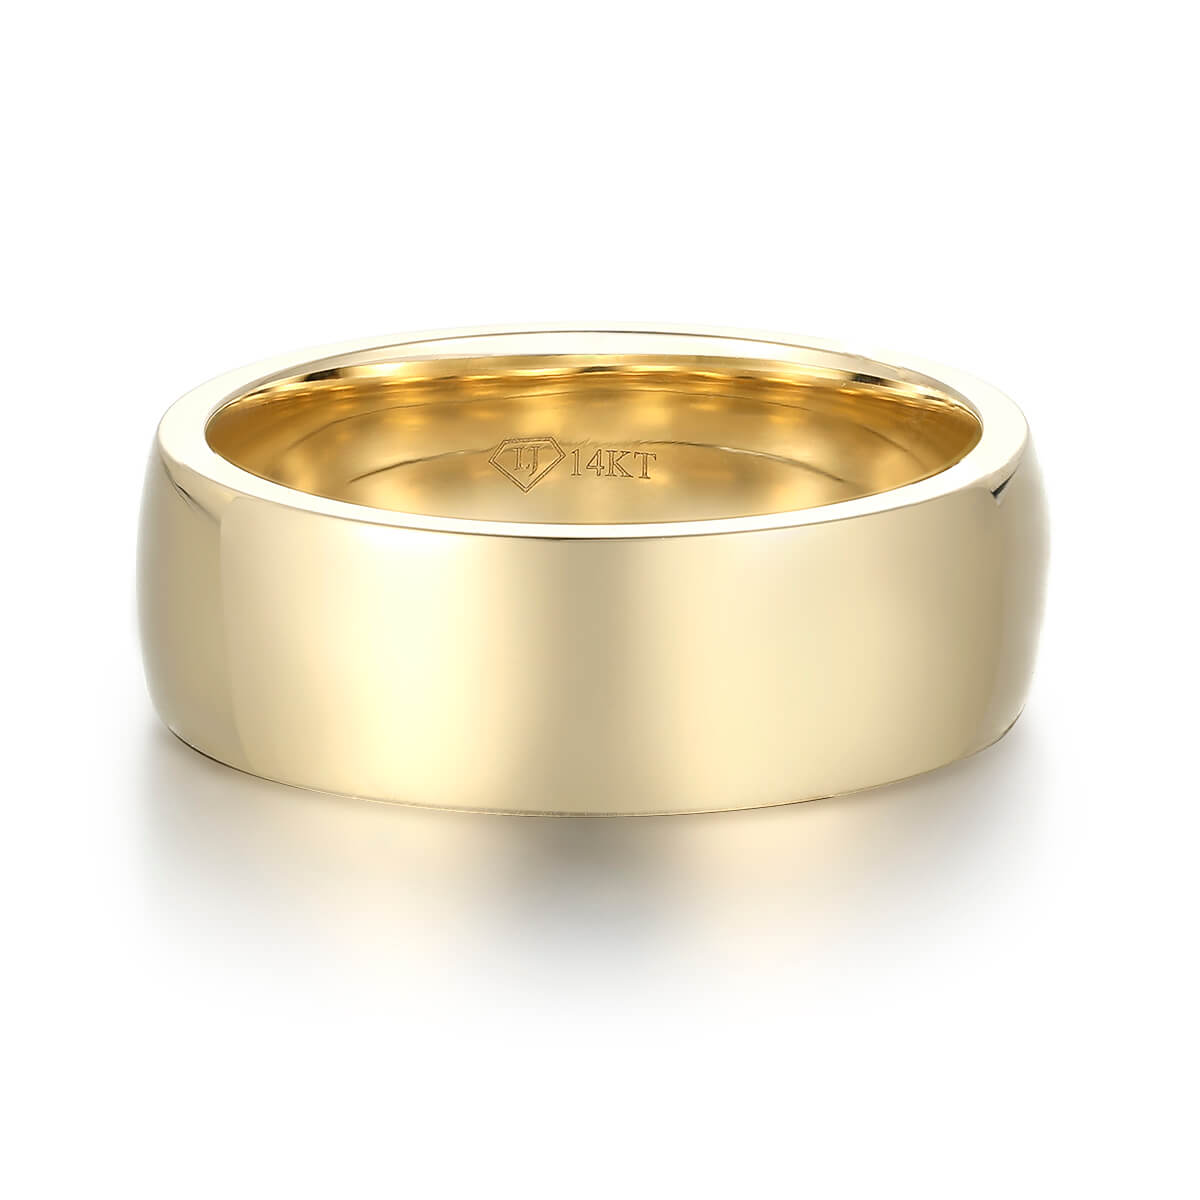 Simon G. MR2273 Men's Wedding Ring - Whiteflash | 4105